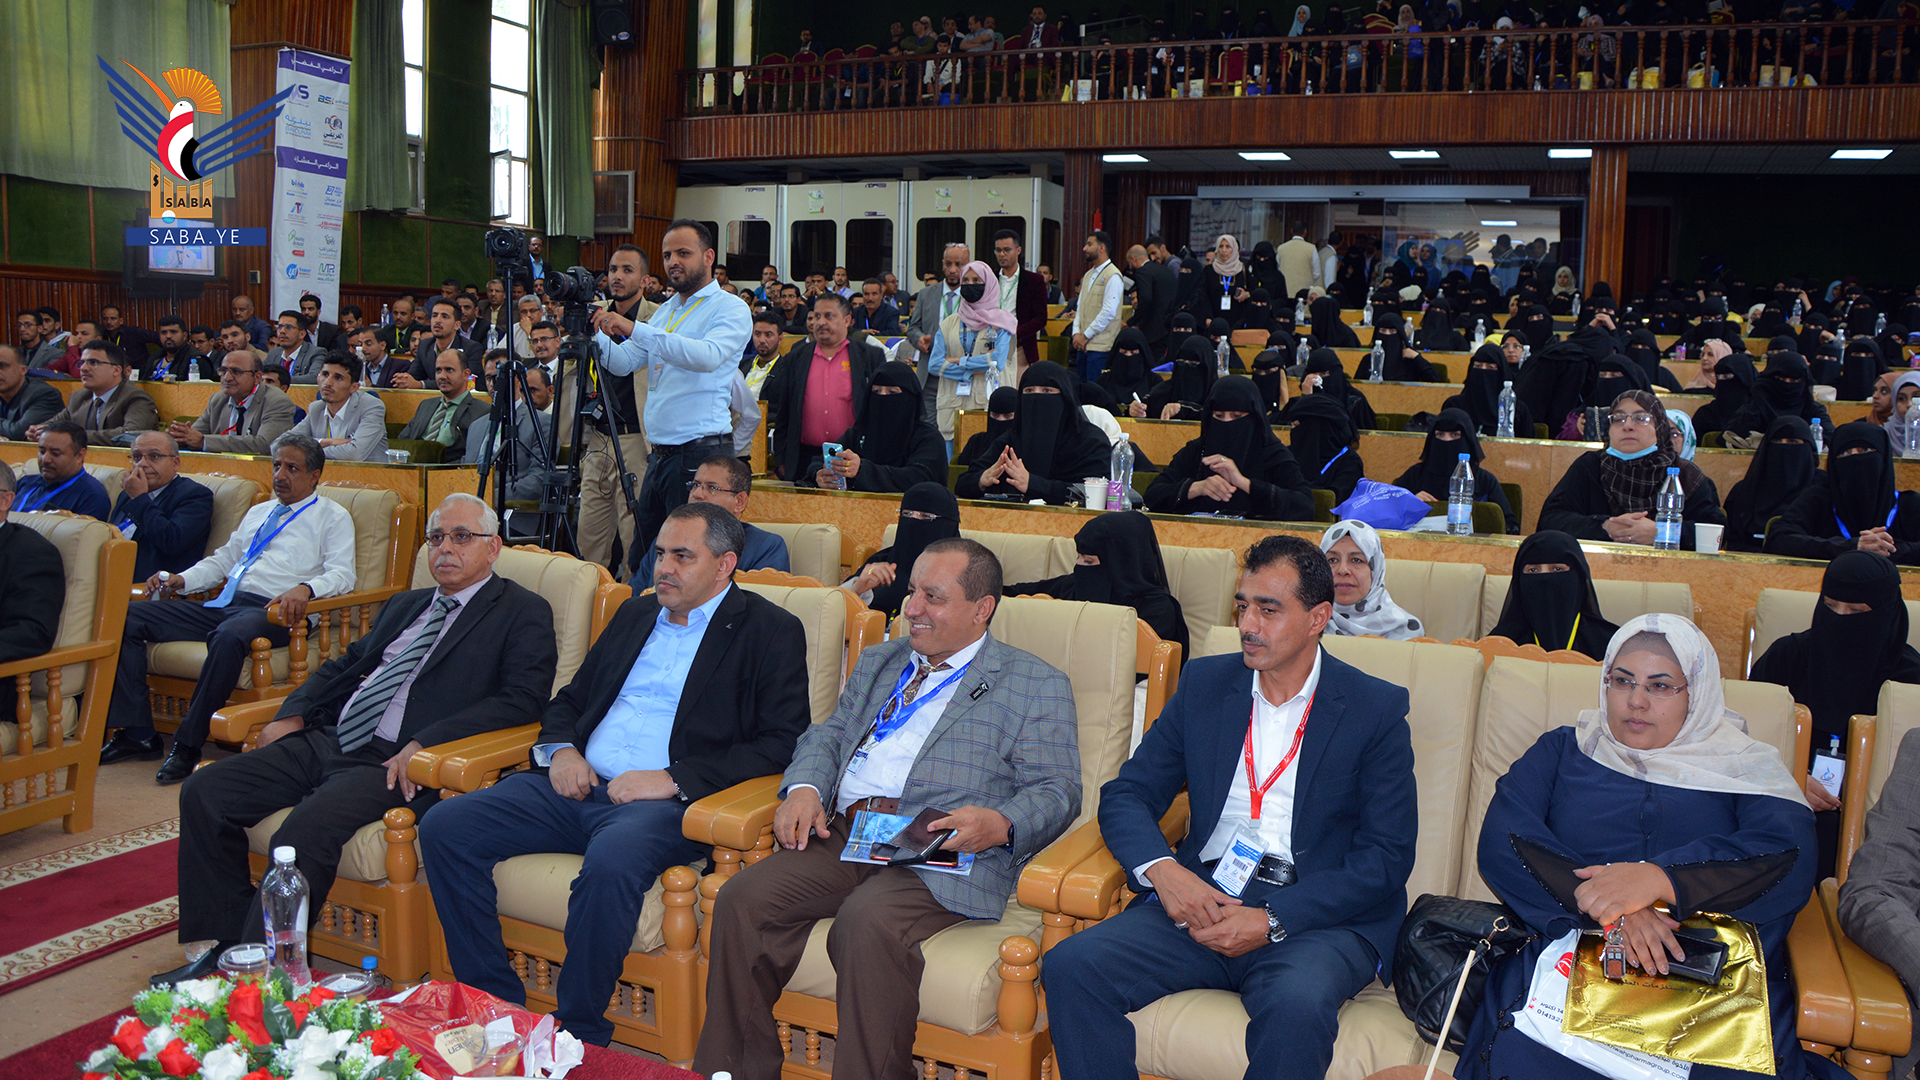 Laboratory medicine conference concluded in Sana'a